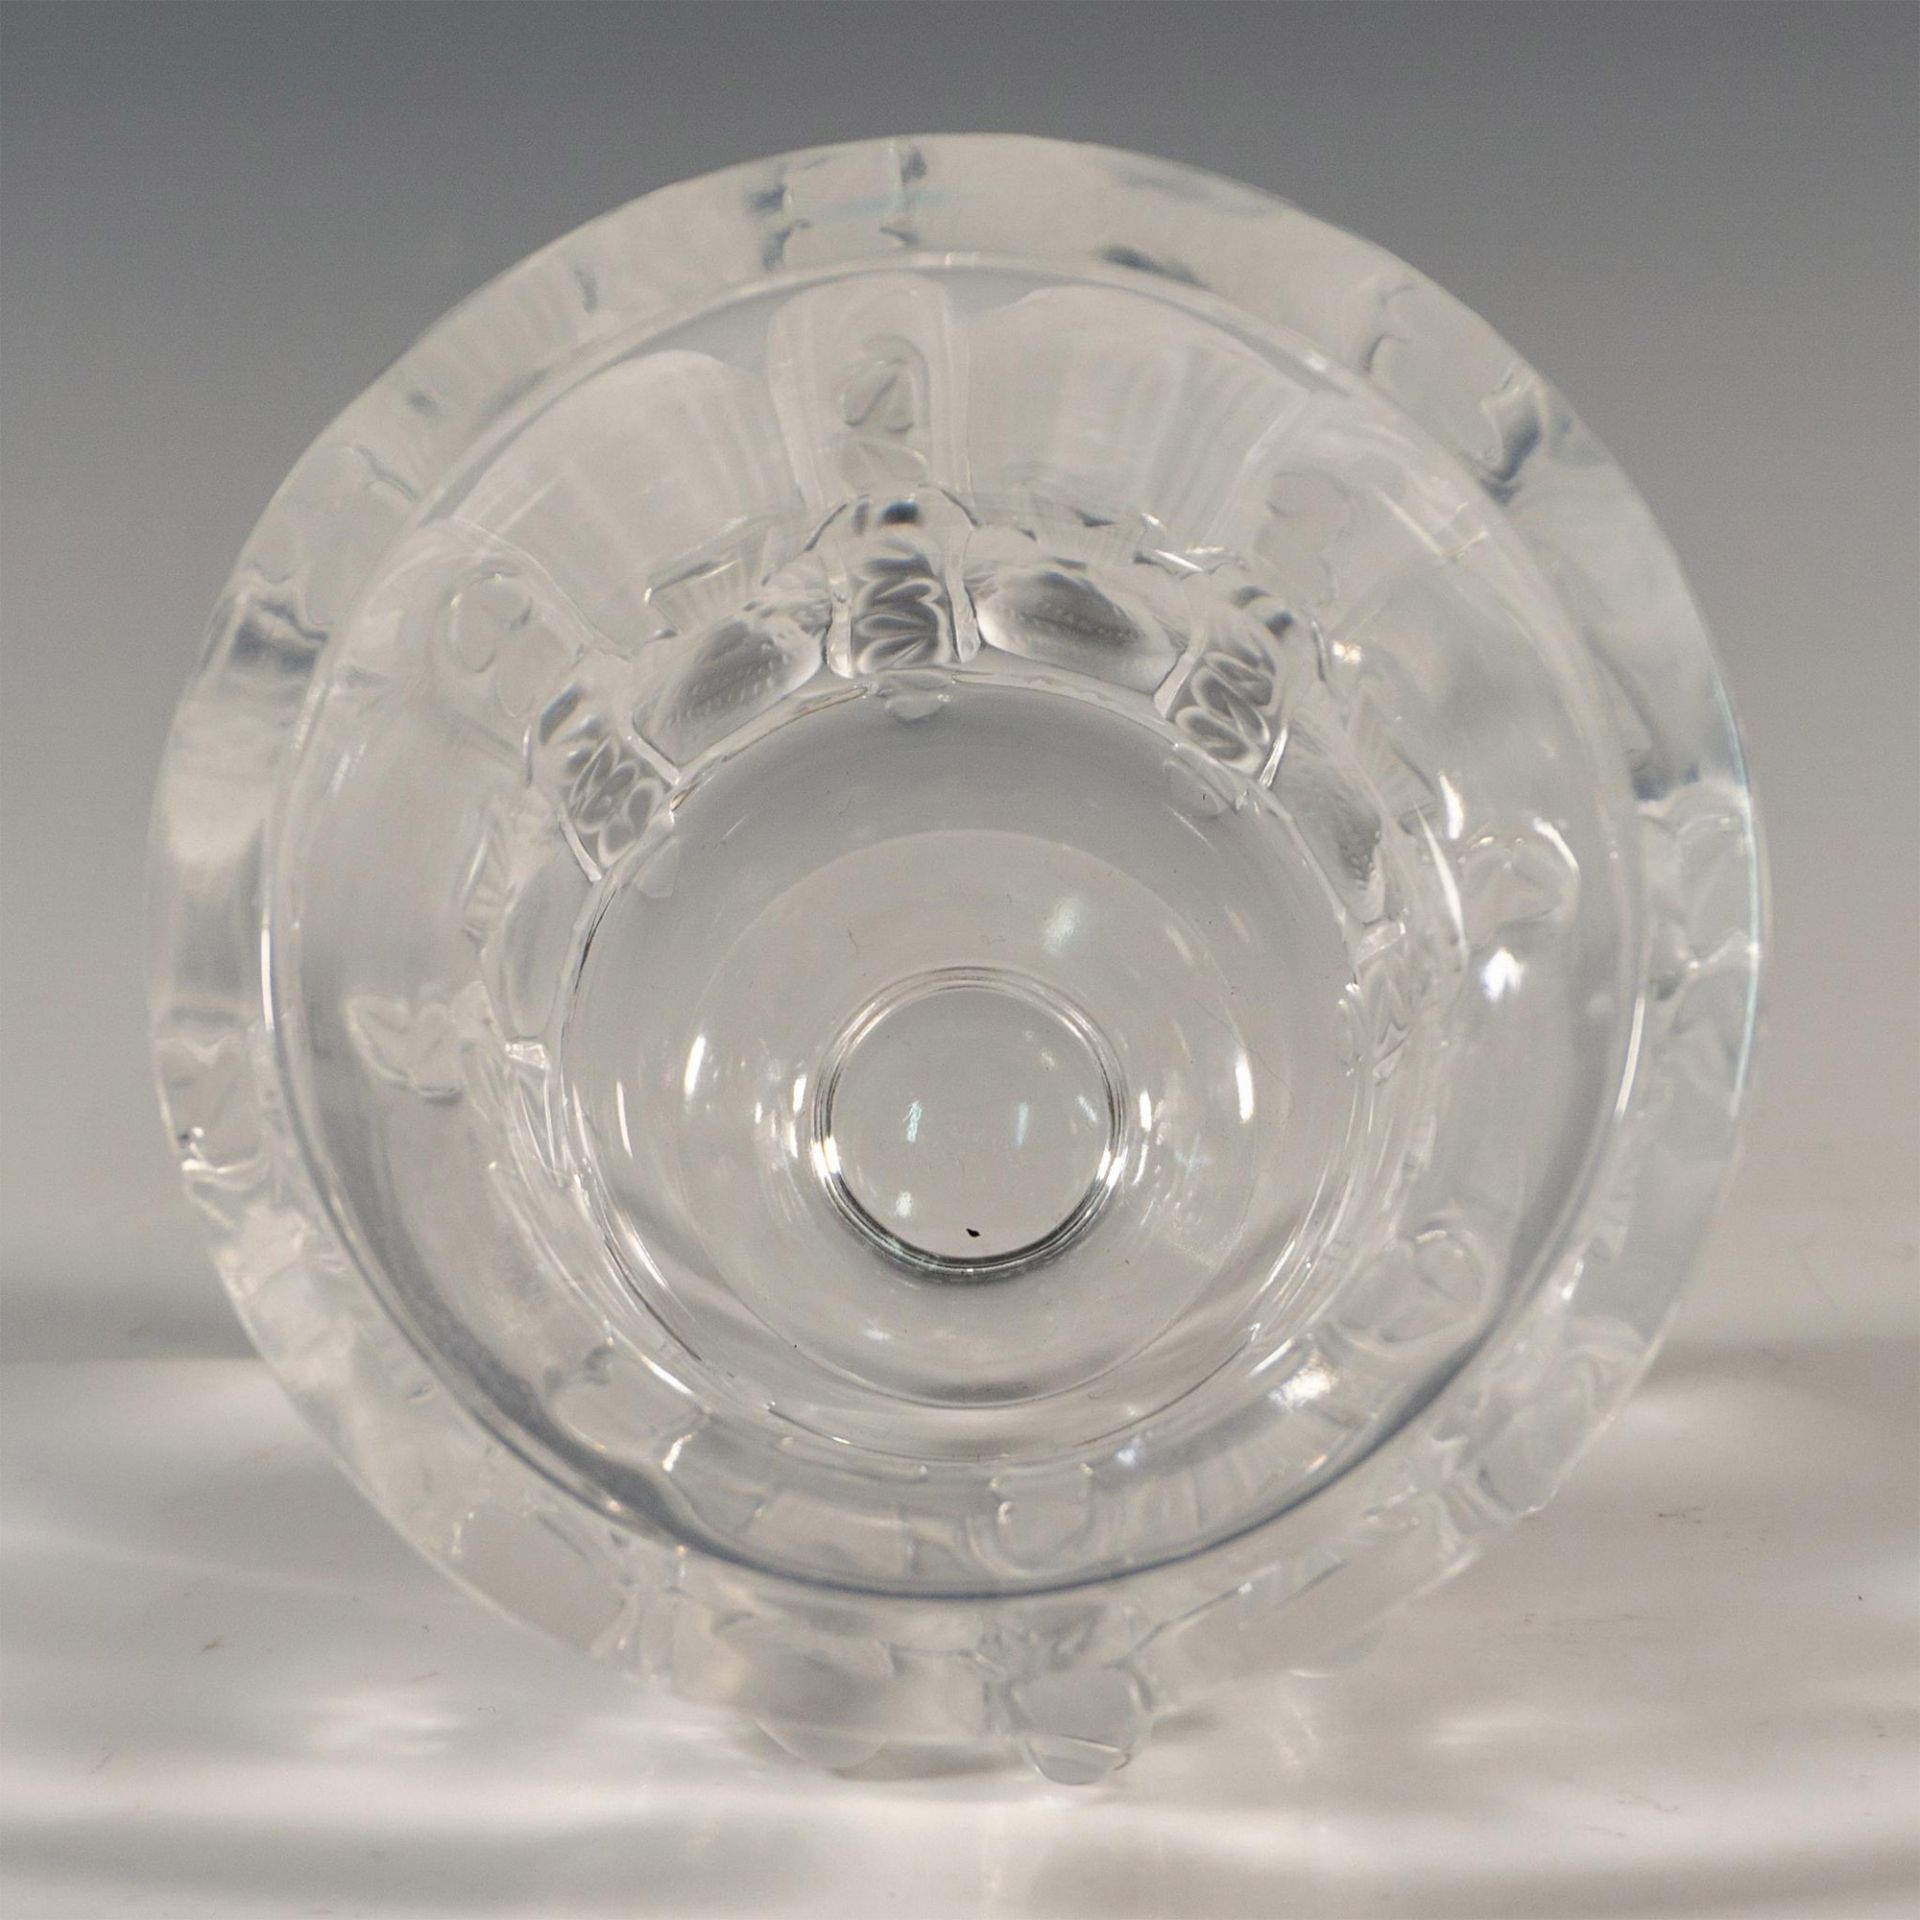 Lalique Crystal Vase, Dampierre - Image 2 of 4